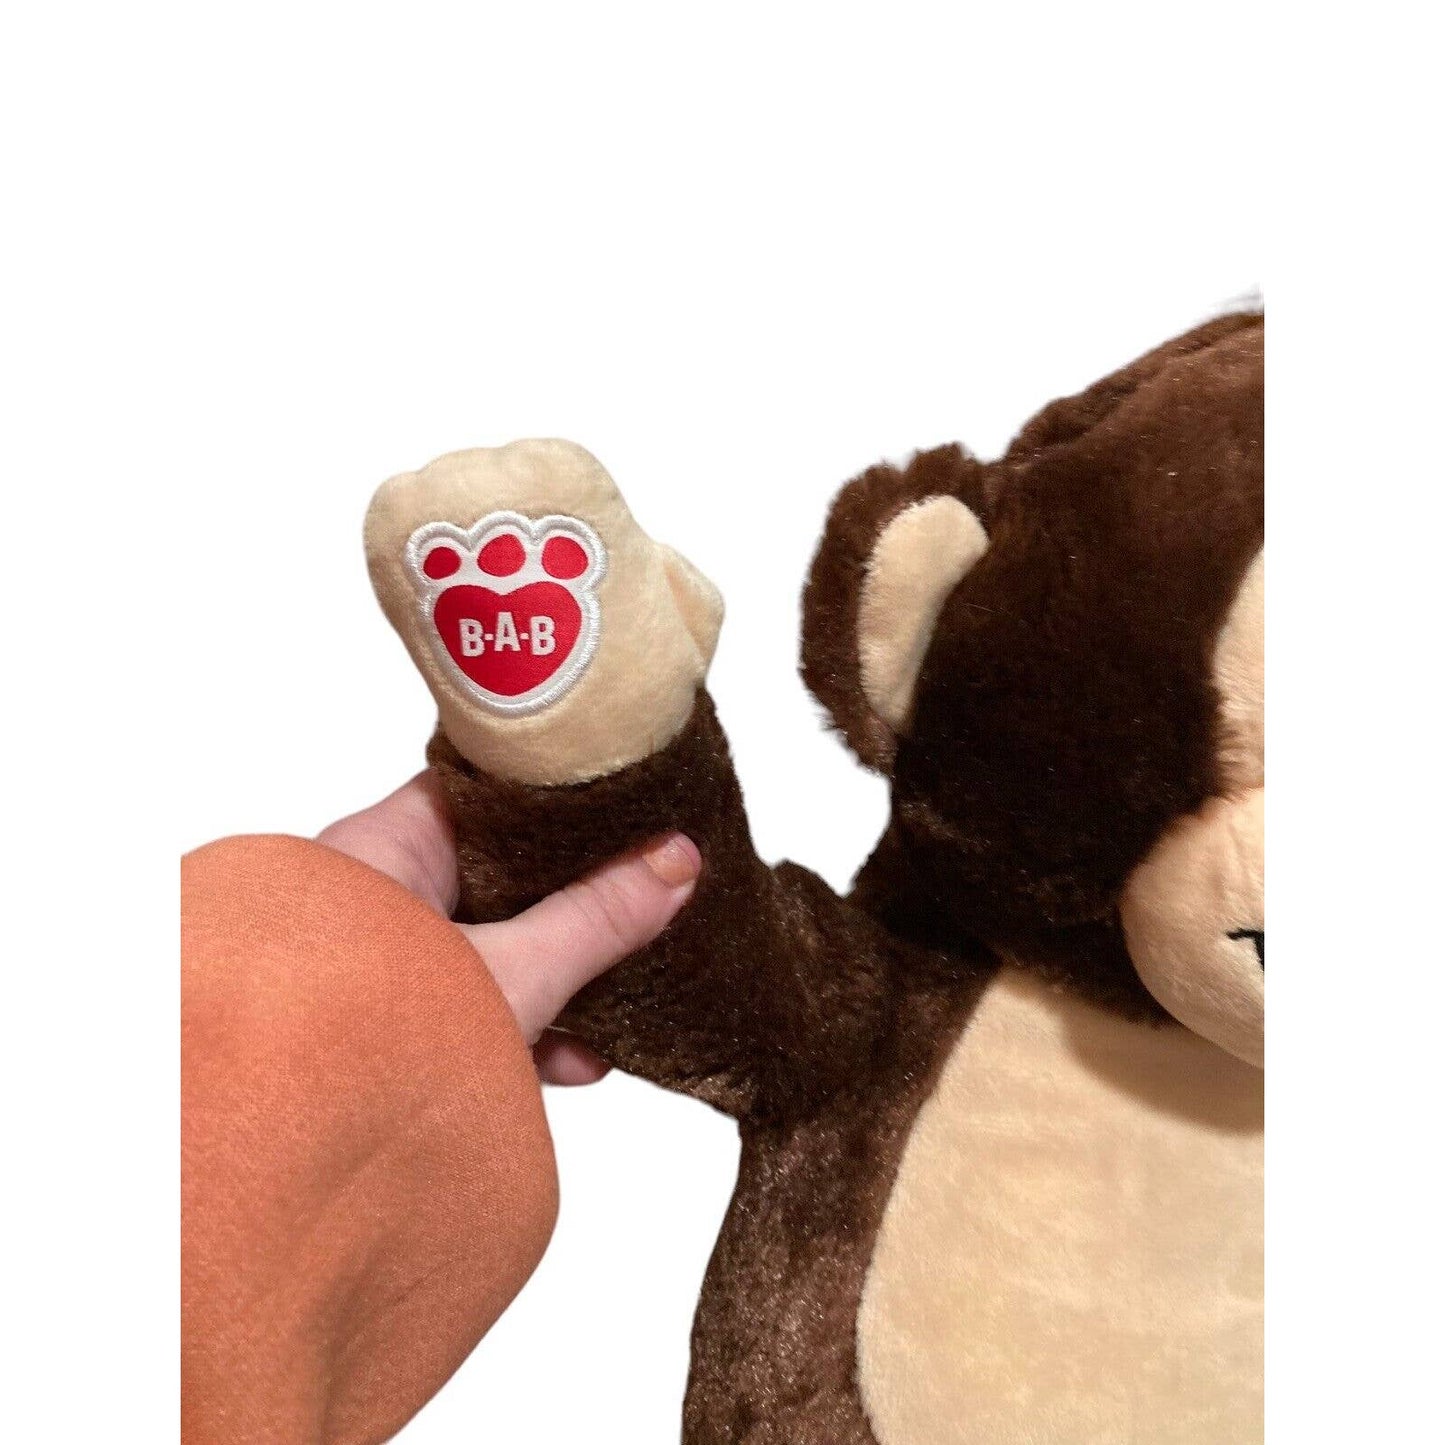 BAB Build A Bear Workshop Smiley Brown Monkey 18” Stuffed Plush Doll Toy Animal